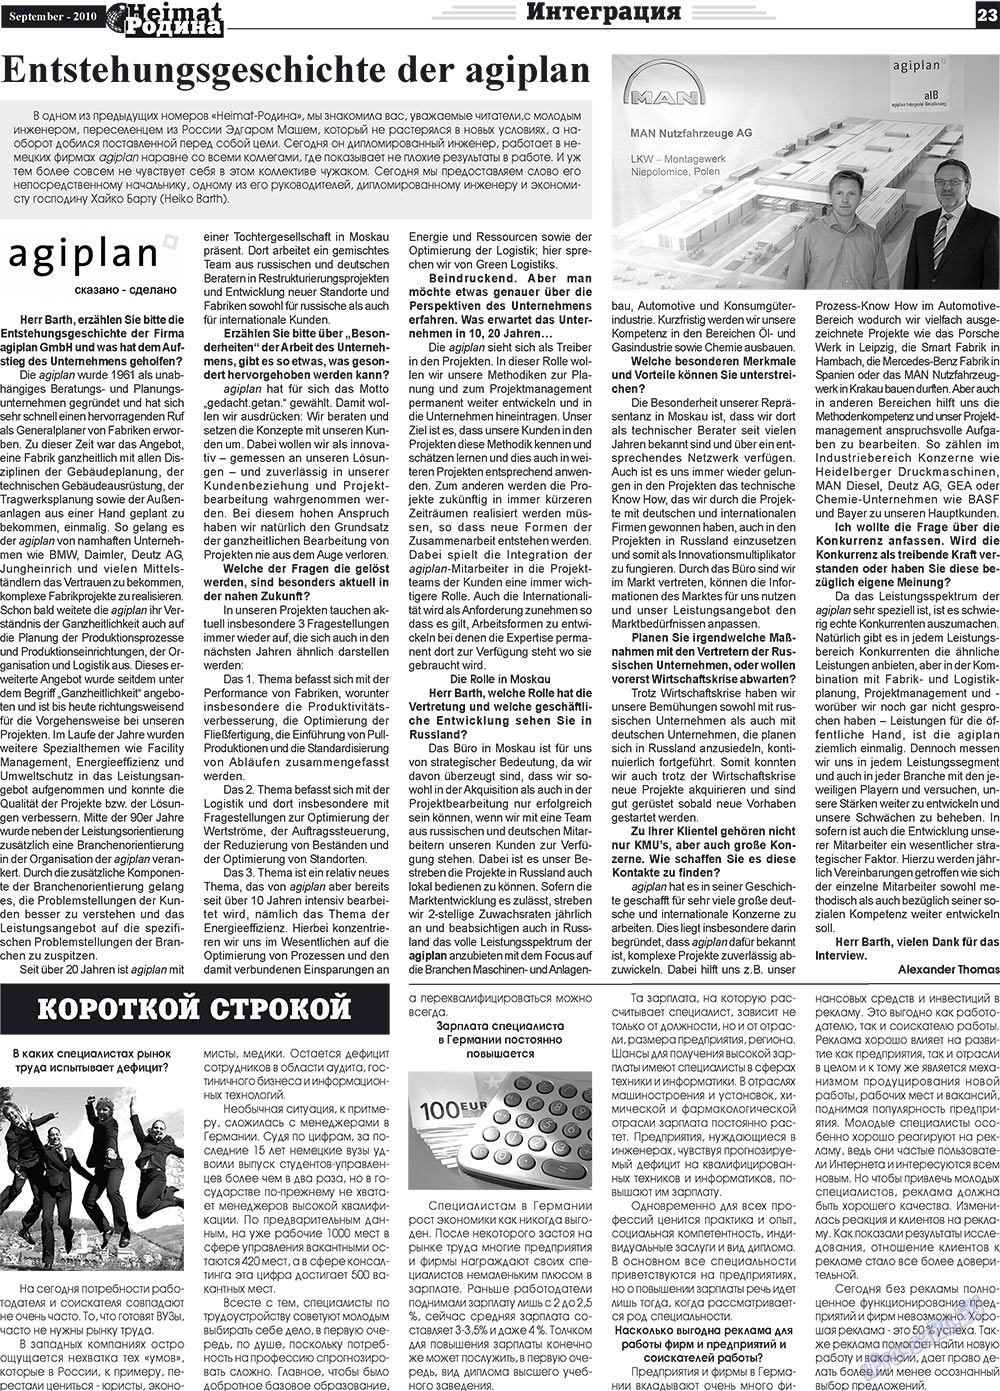 Heimat-Родина, газета. 2010 №9 стр.23